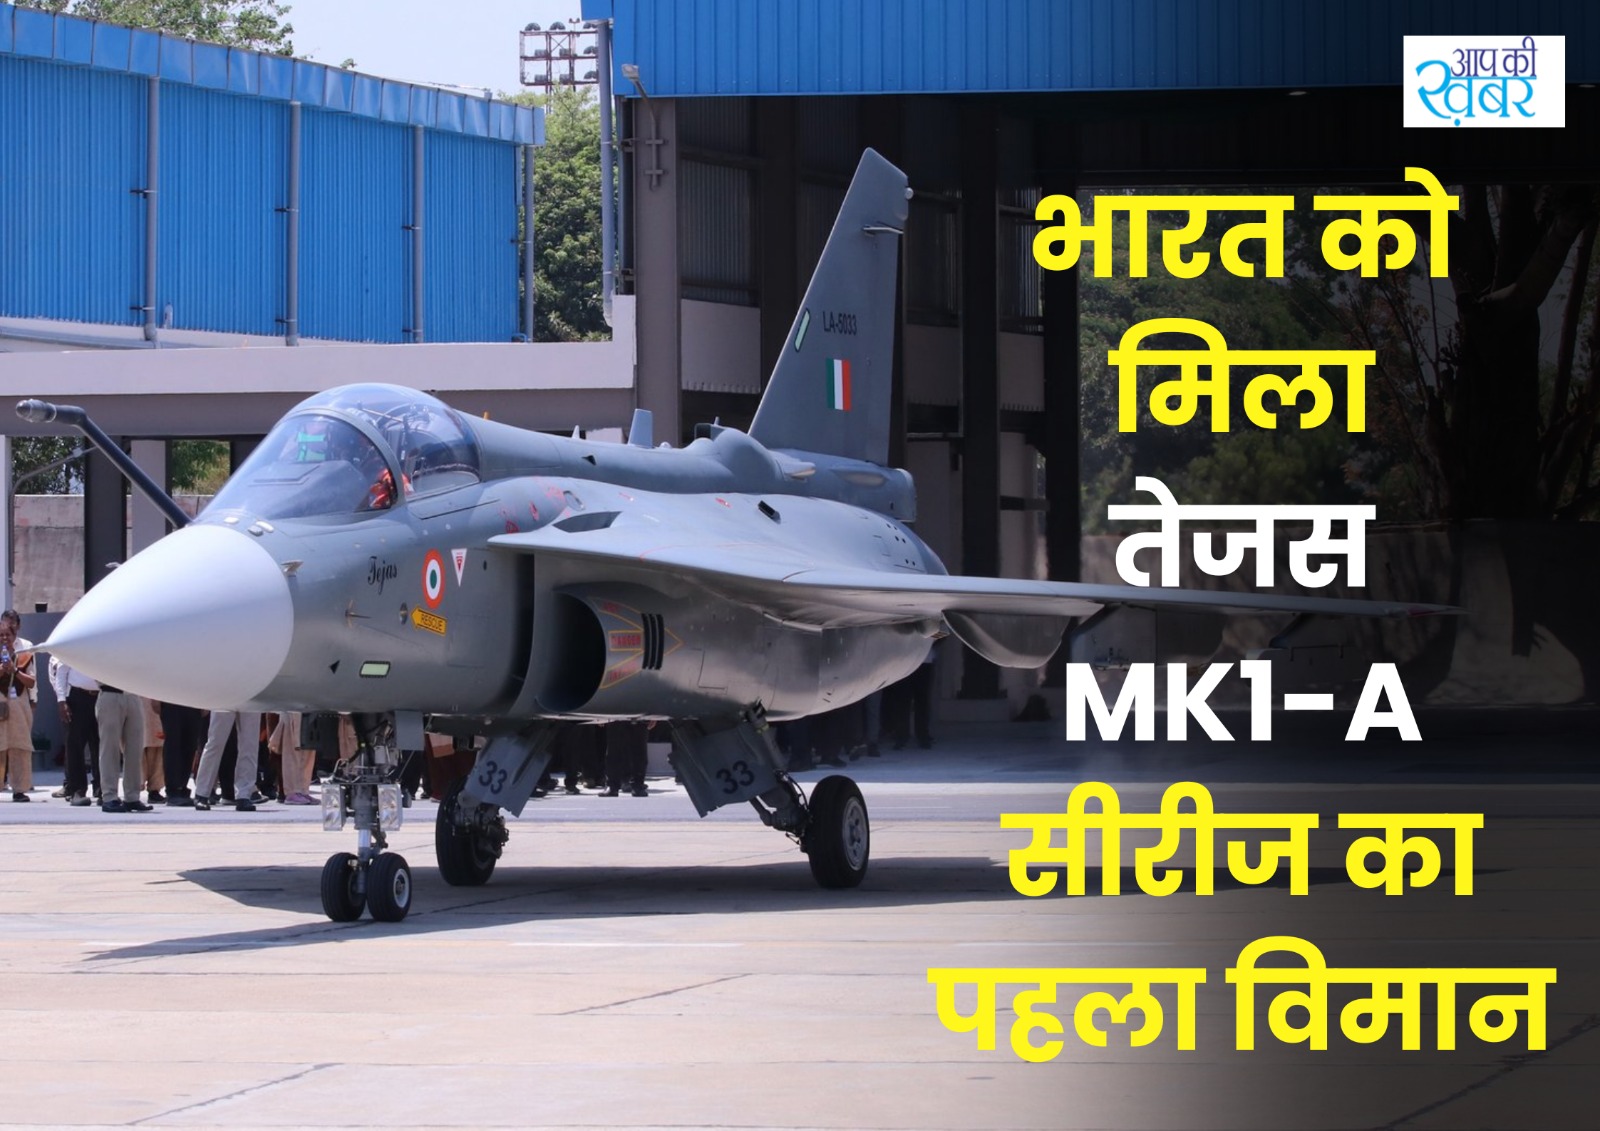 Tejas MK1-A Aircraft: India got the first aircraft of Tejas MK1-A series